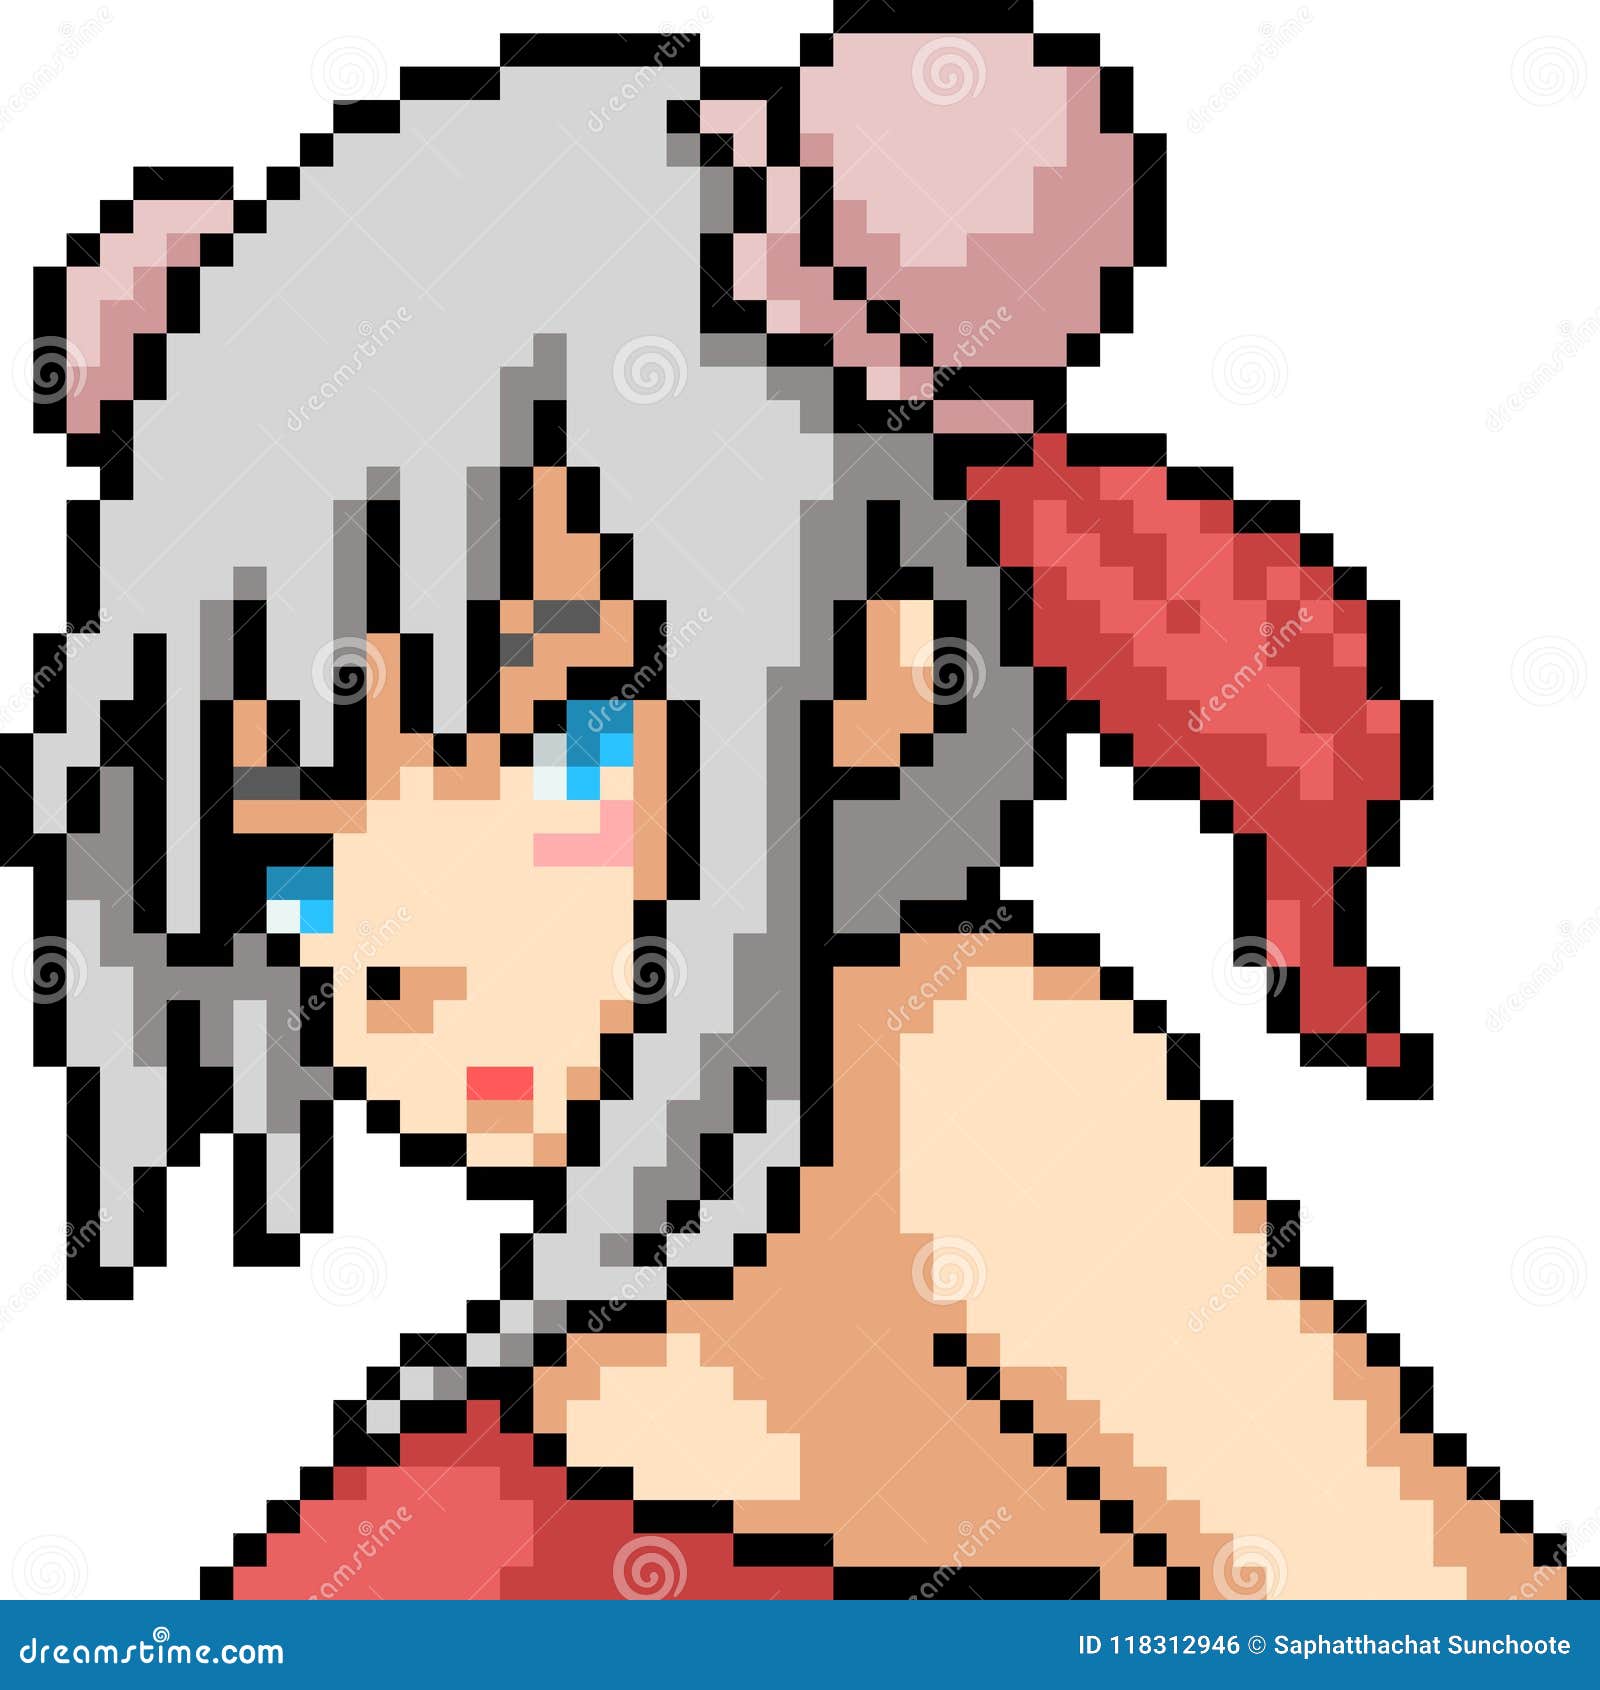 Vector pixel art anime gil stock vector. Illustration of woman - 118468766